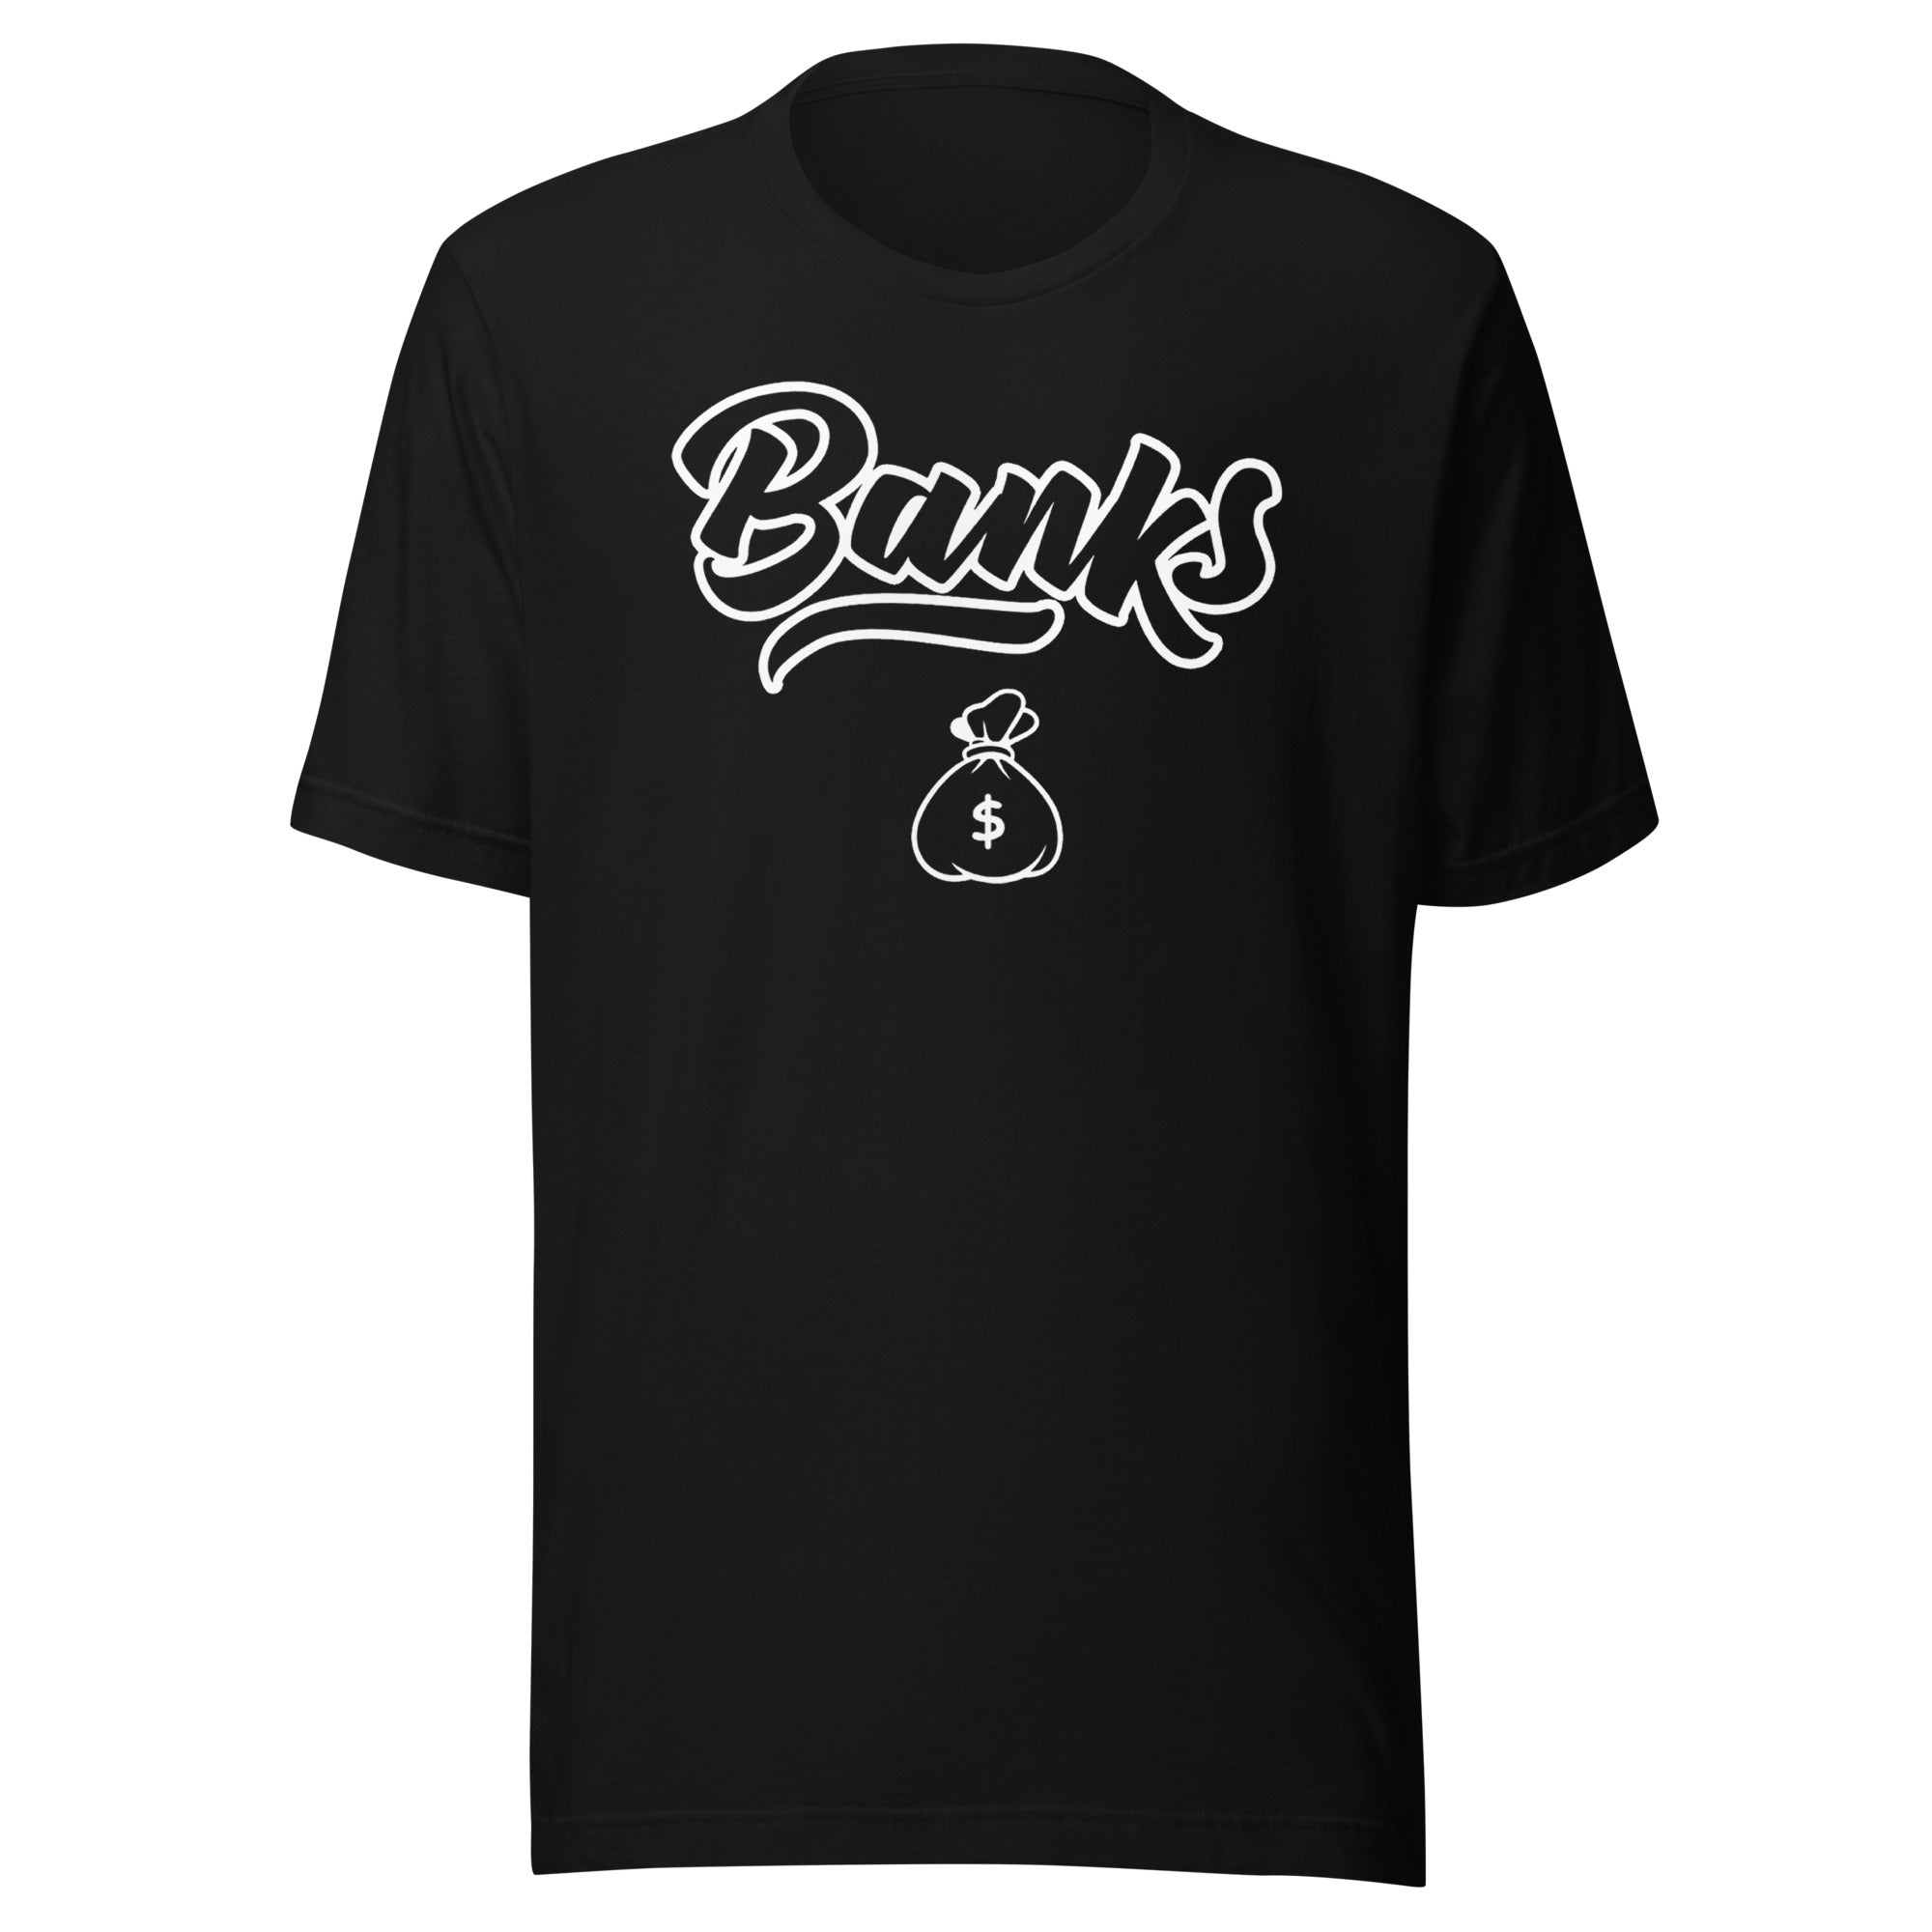 Banks 1433  - t-shirt